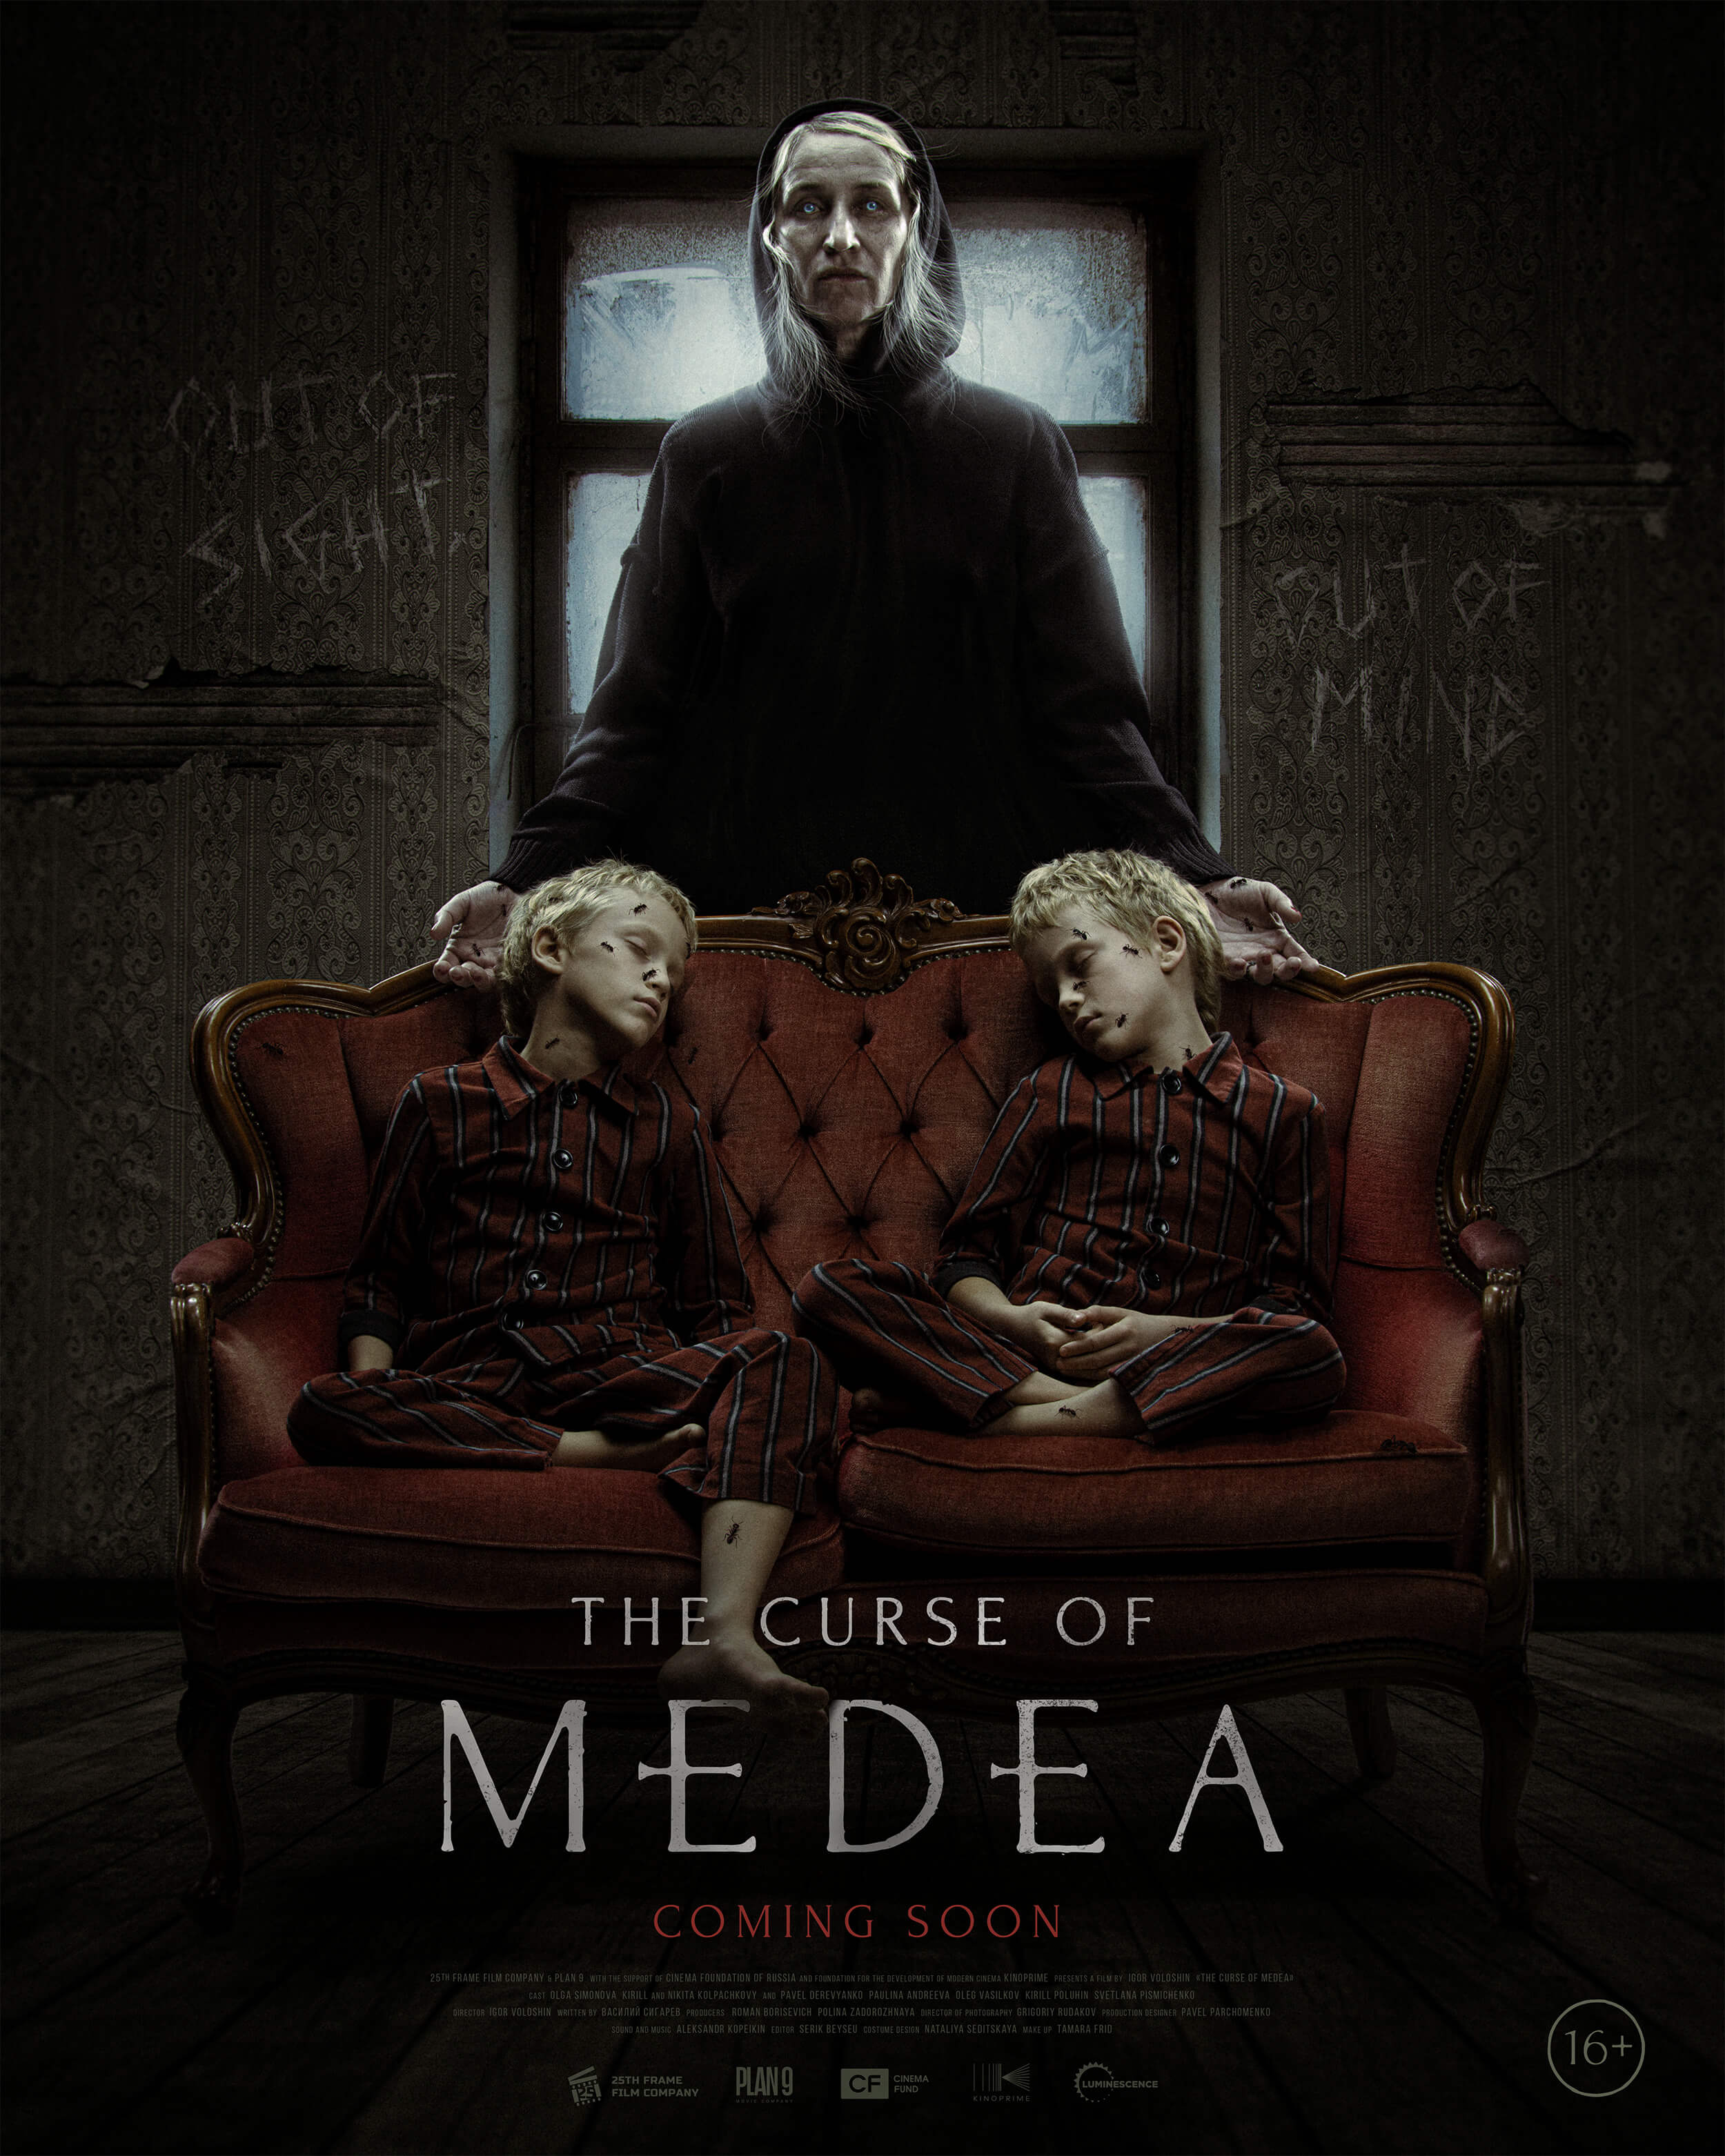 The Curse of Medea